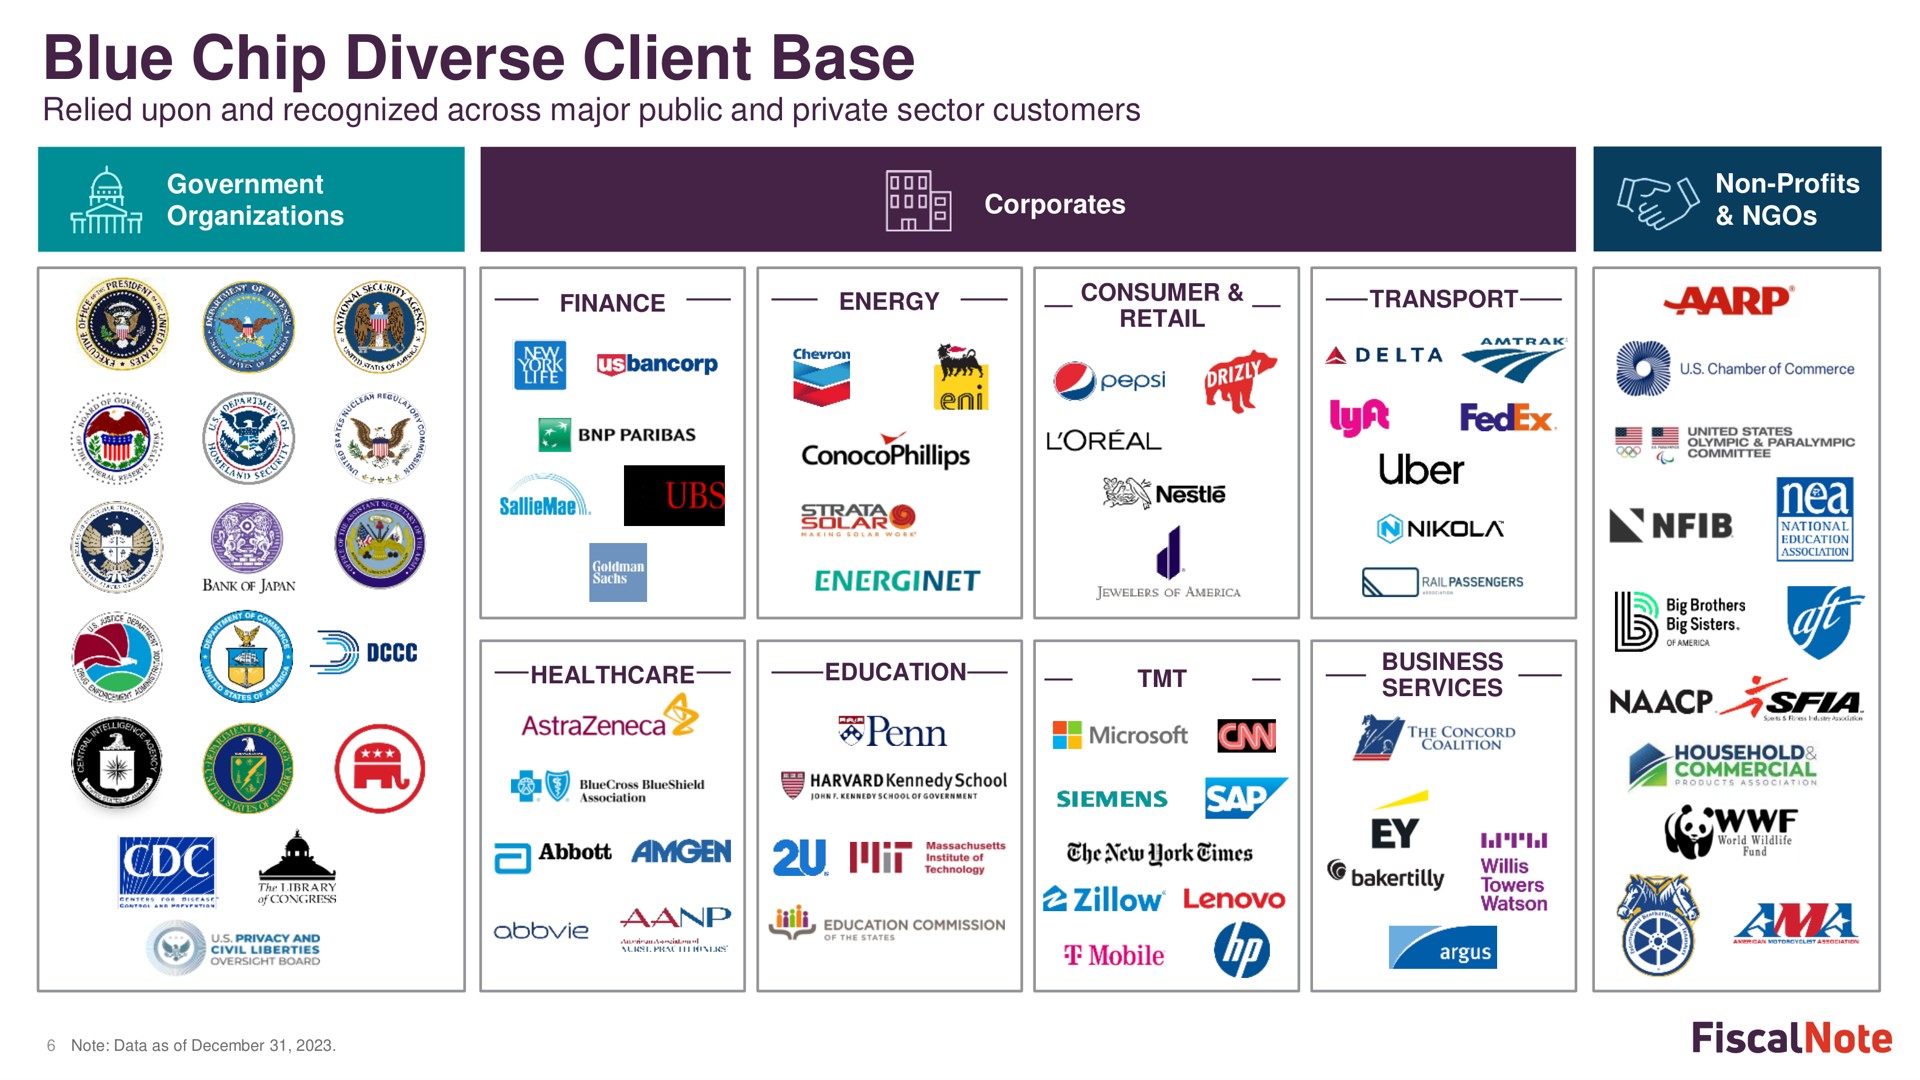 blue chip diverse client base business services no a commercial | FiscalNote